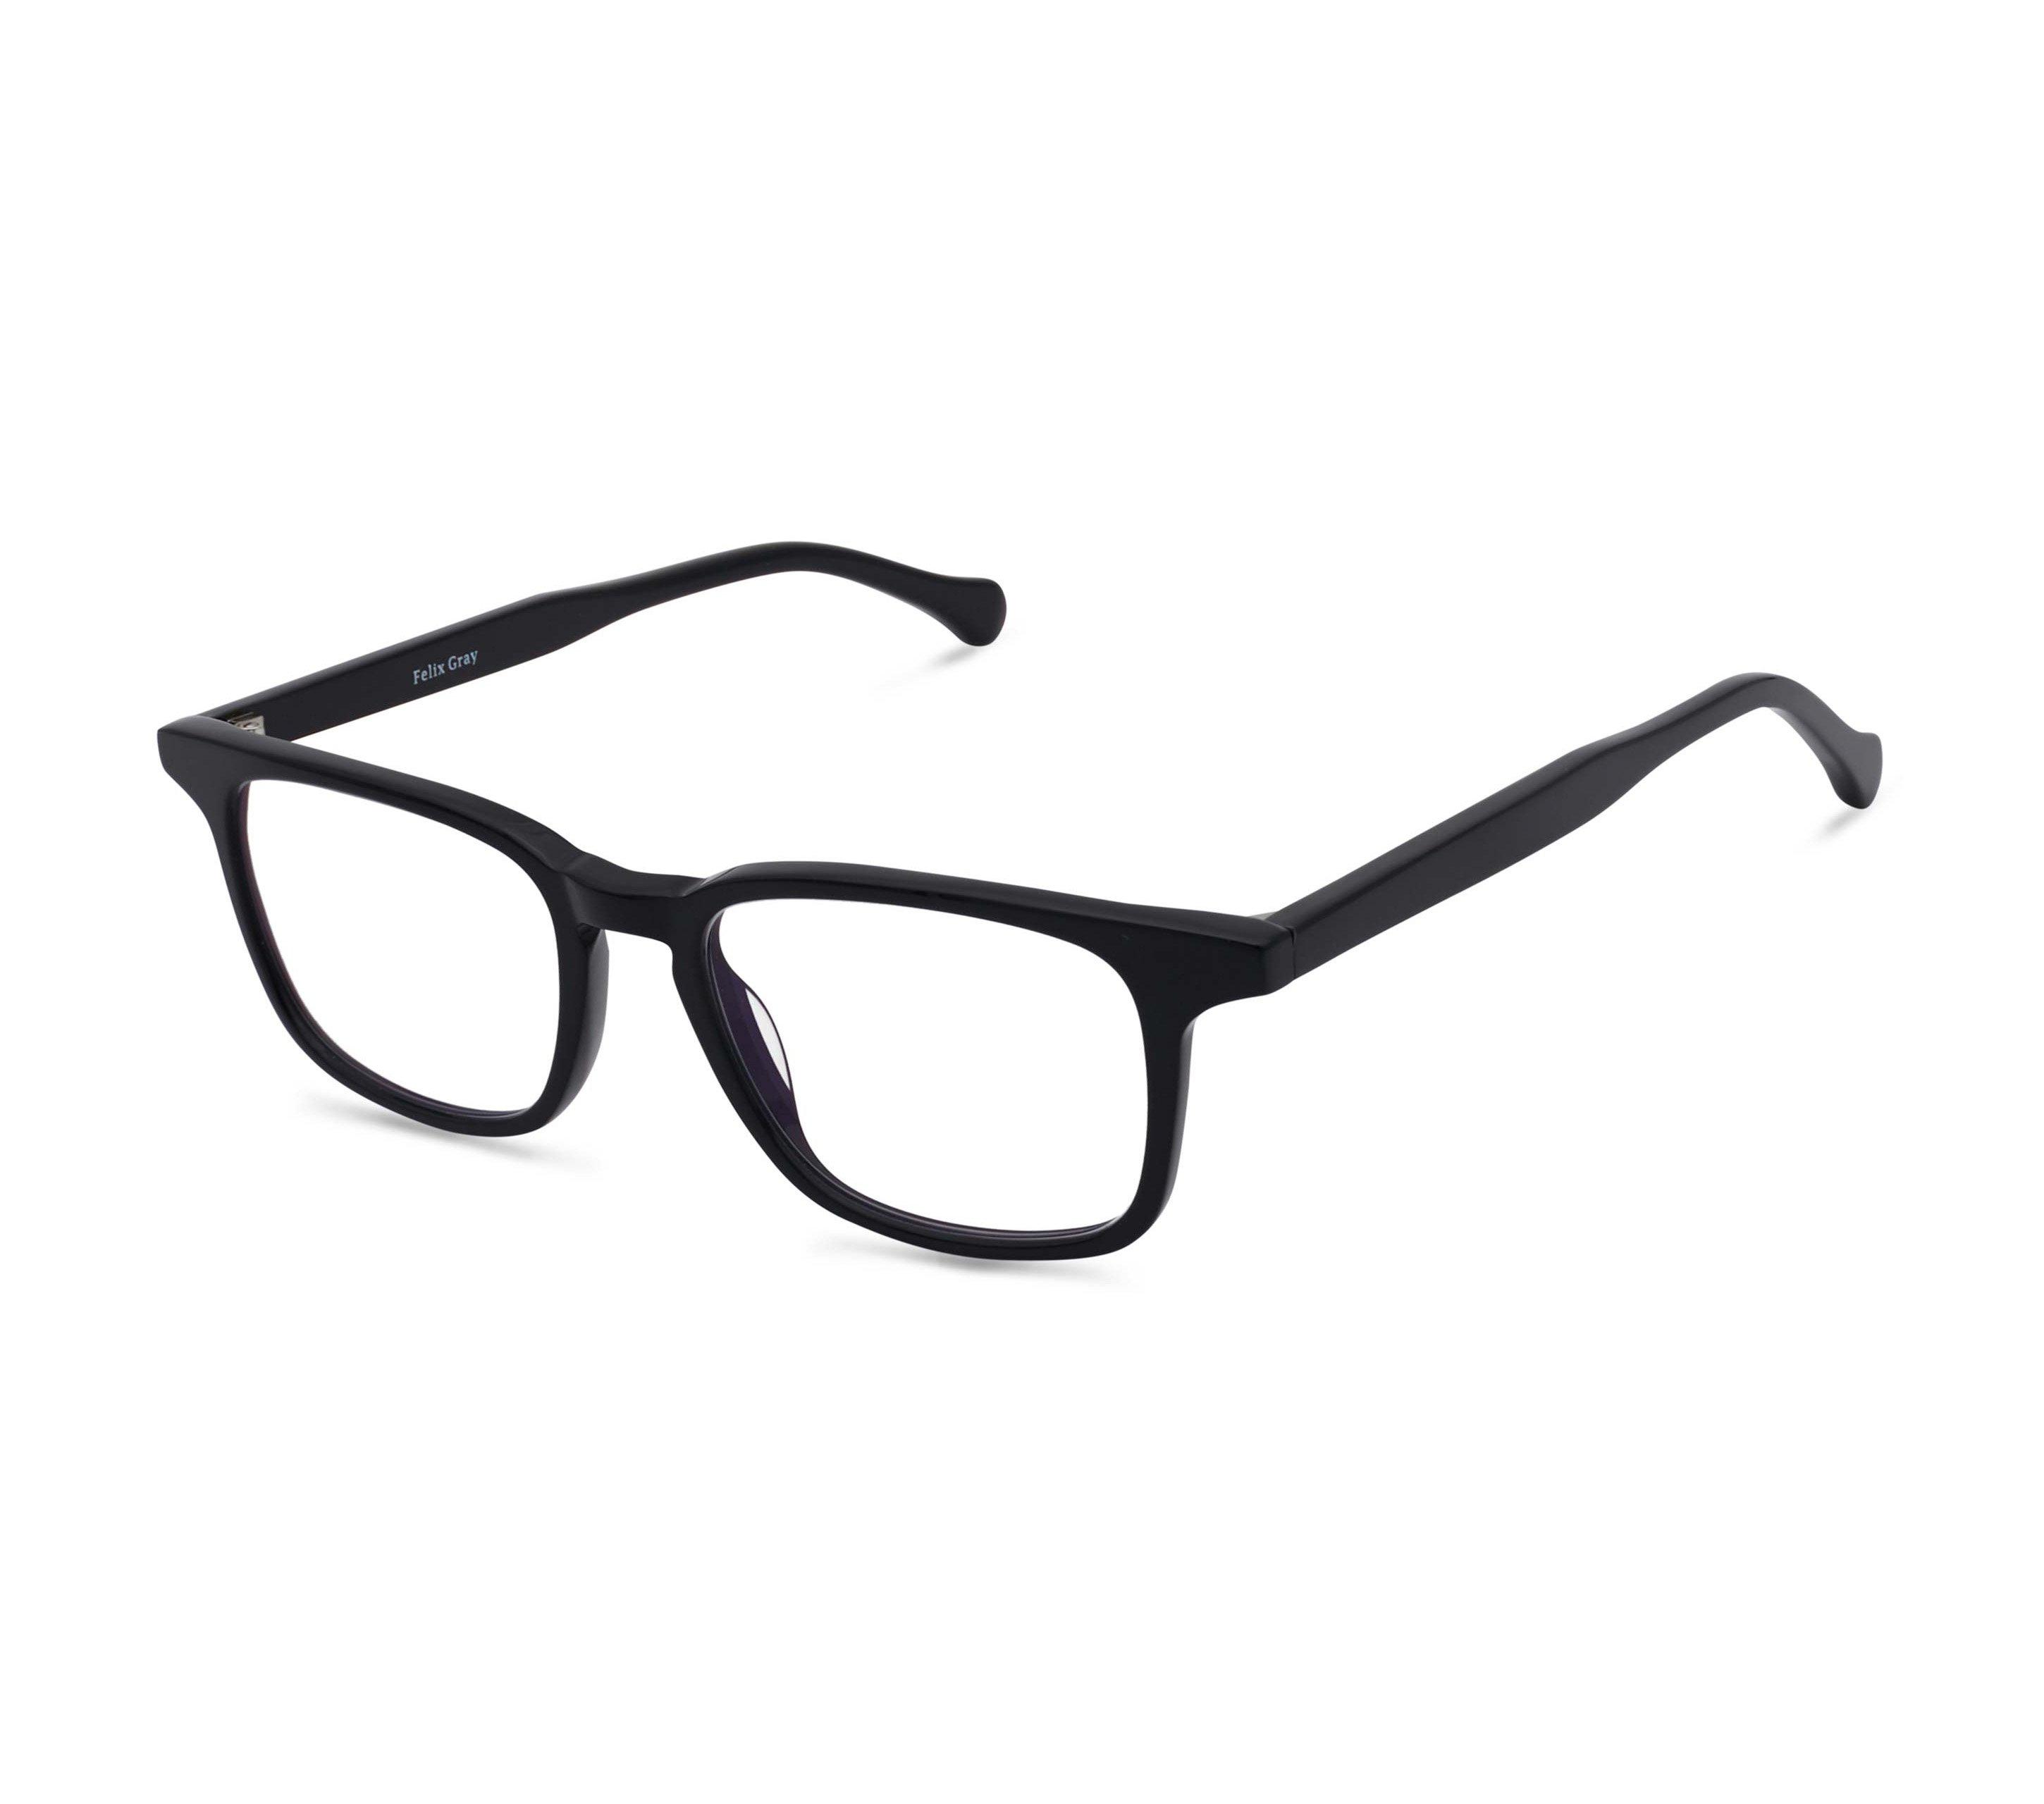 Felix Gray Nash Small Frame Blue Light Glasses Size Large for Kids Ages 9-13